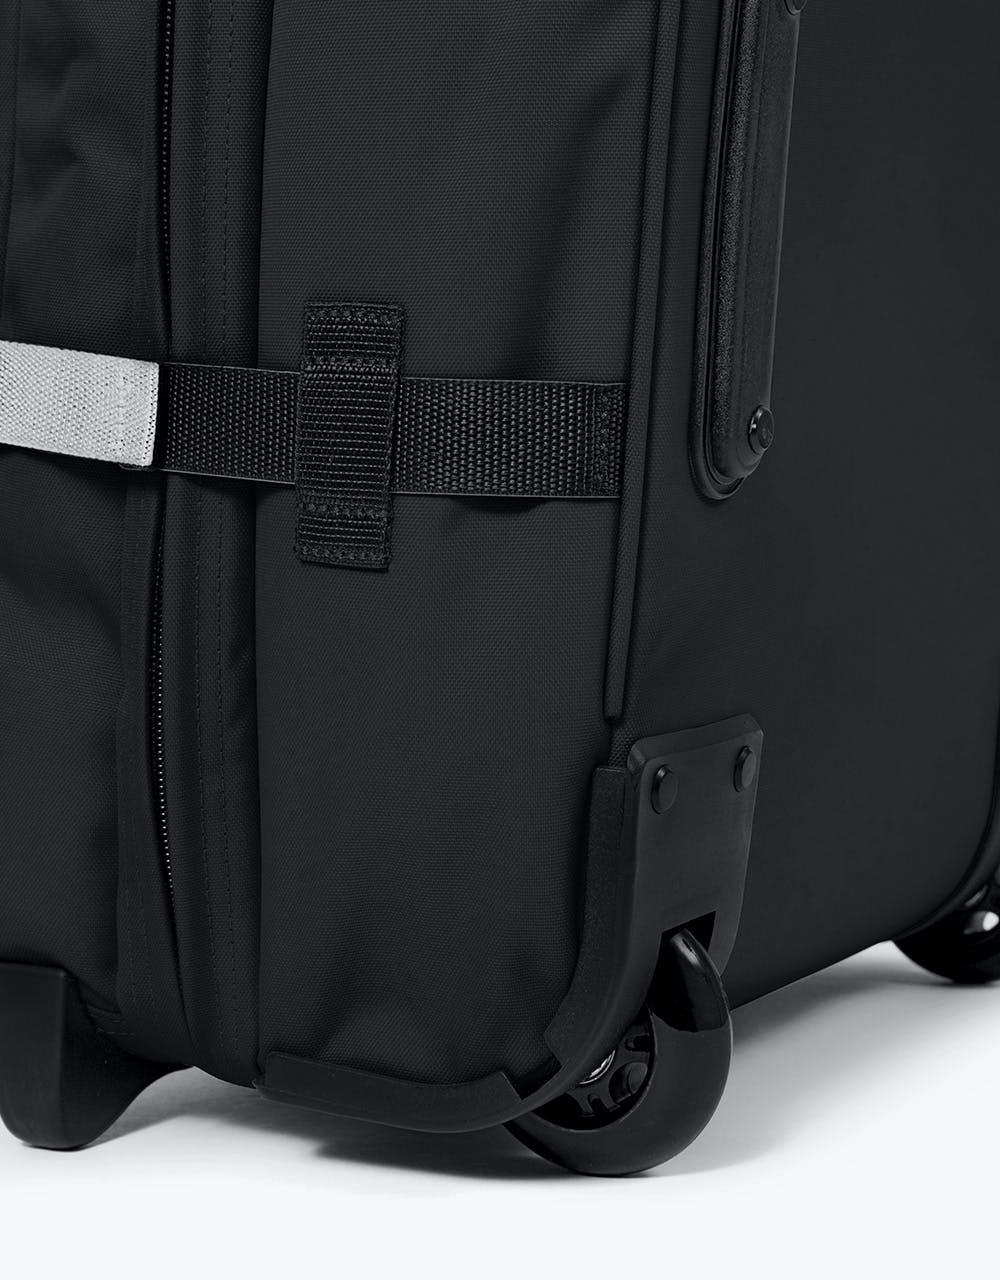 Eastpak Tranverz Large Wheeled Luggage Bag - Blakout Black/White